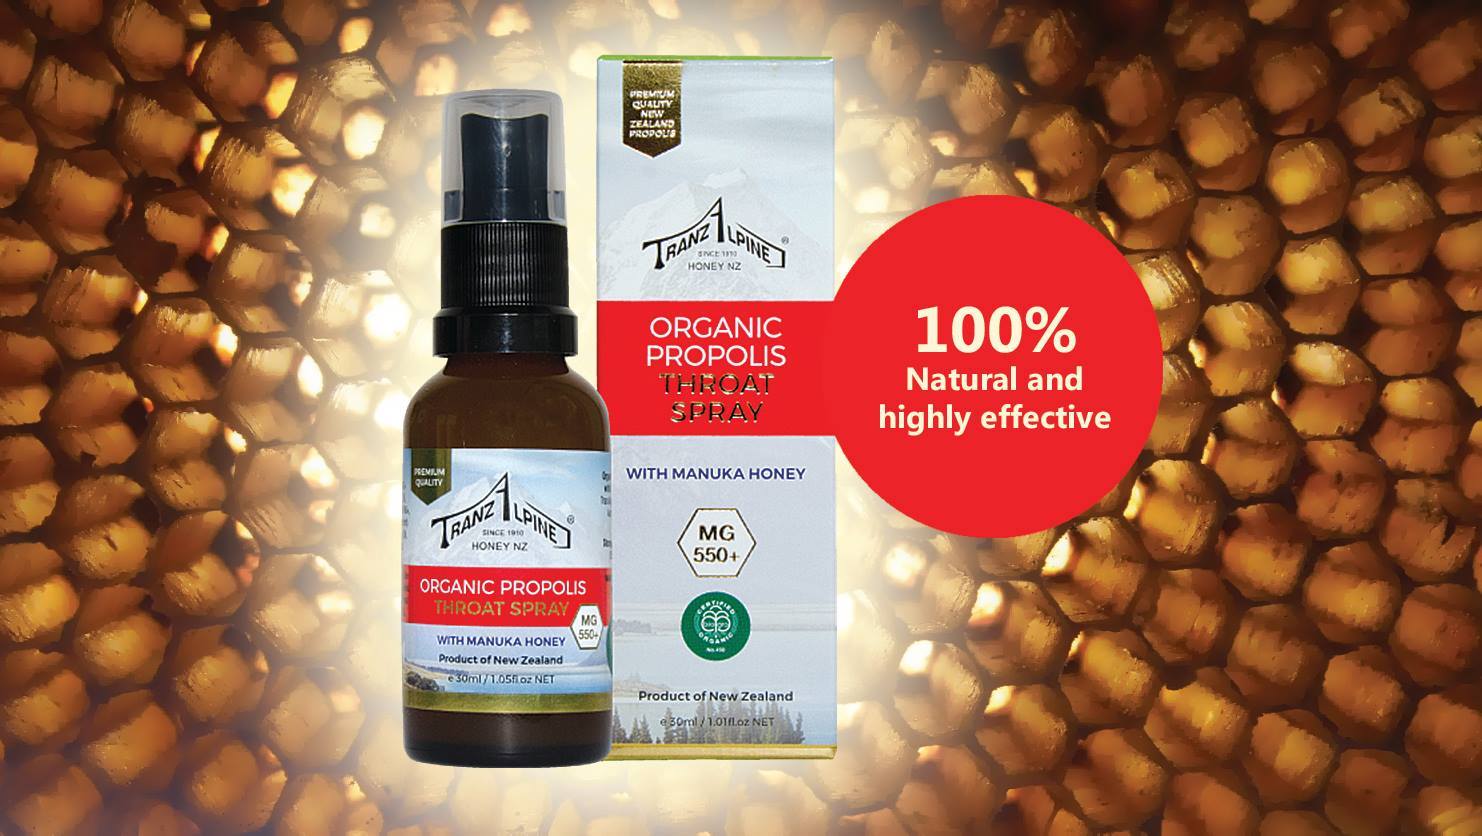 Xịt họng keo ong Organic Propolis Throat Spray with Manuka Honey MG550+